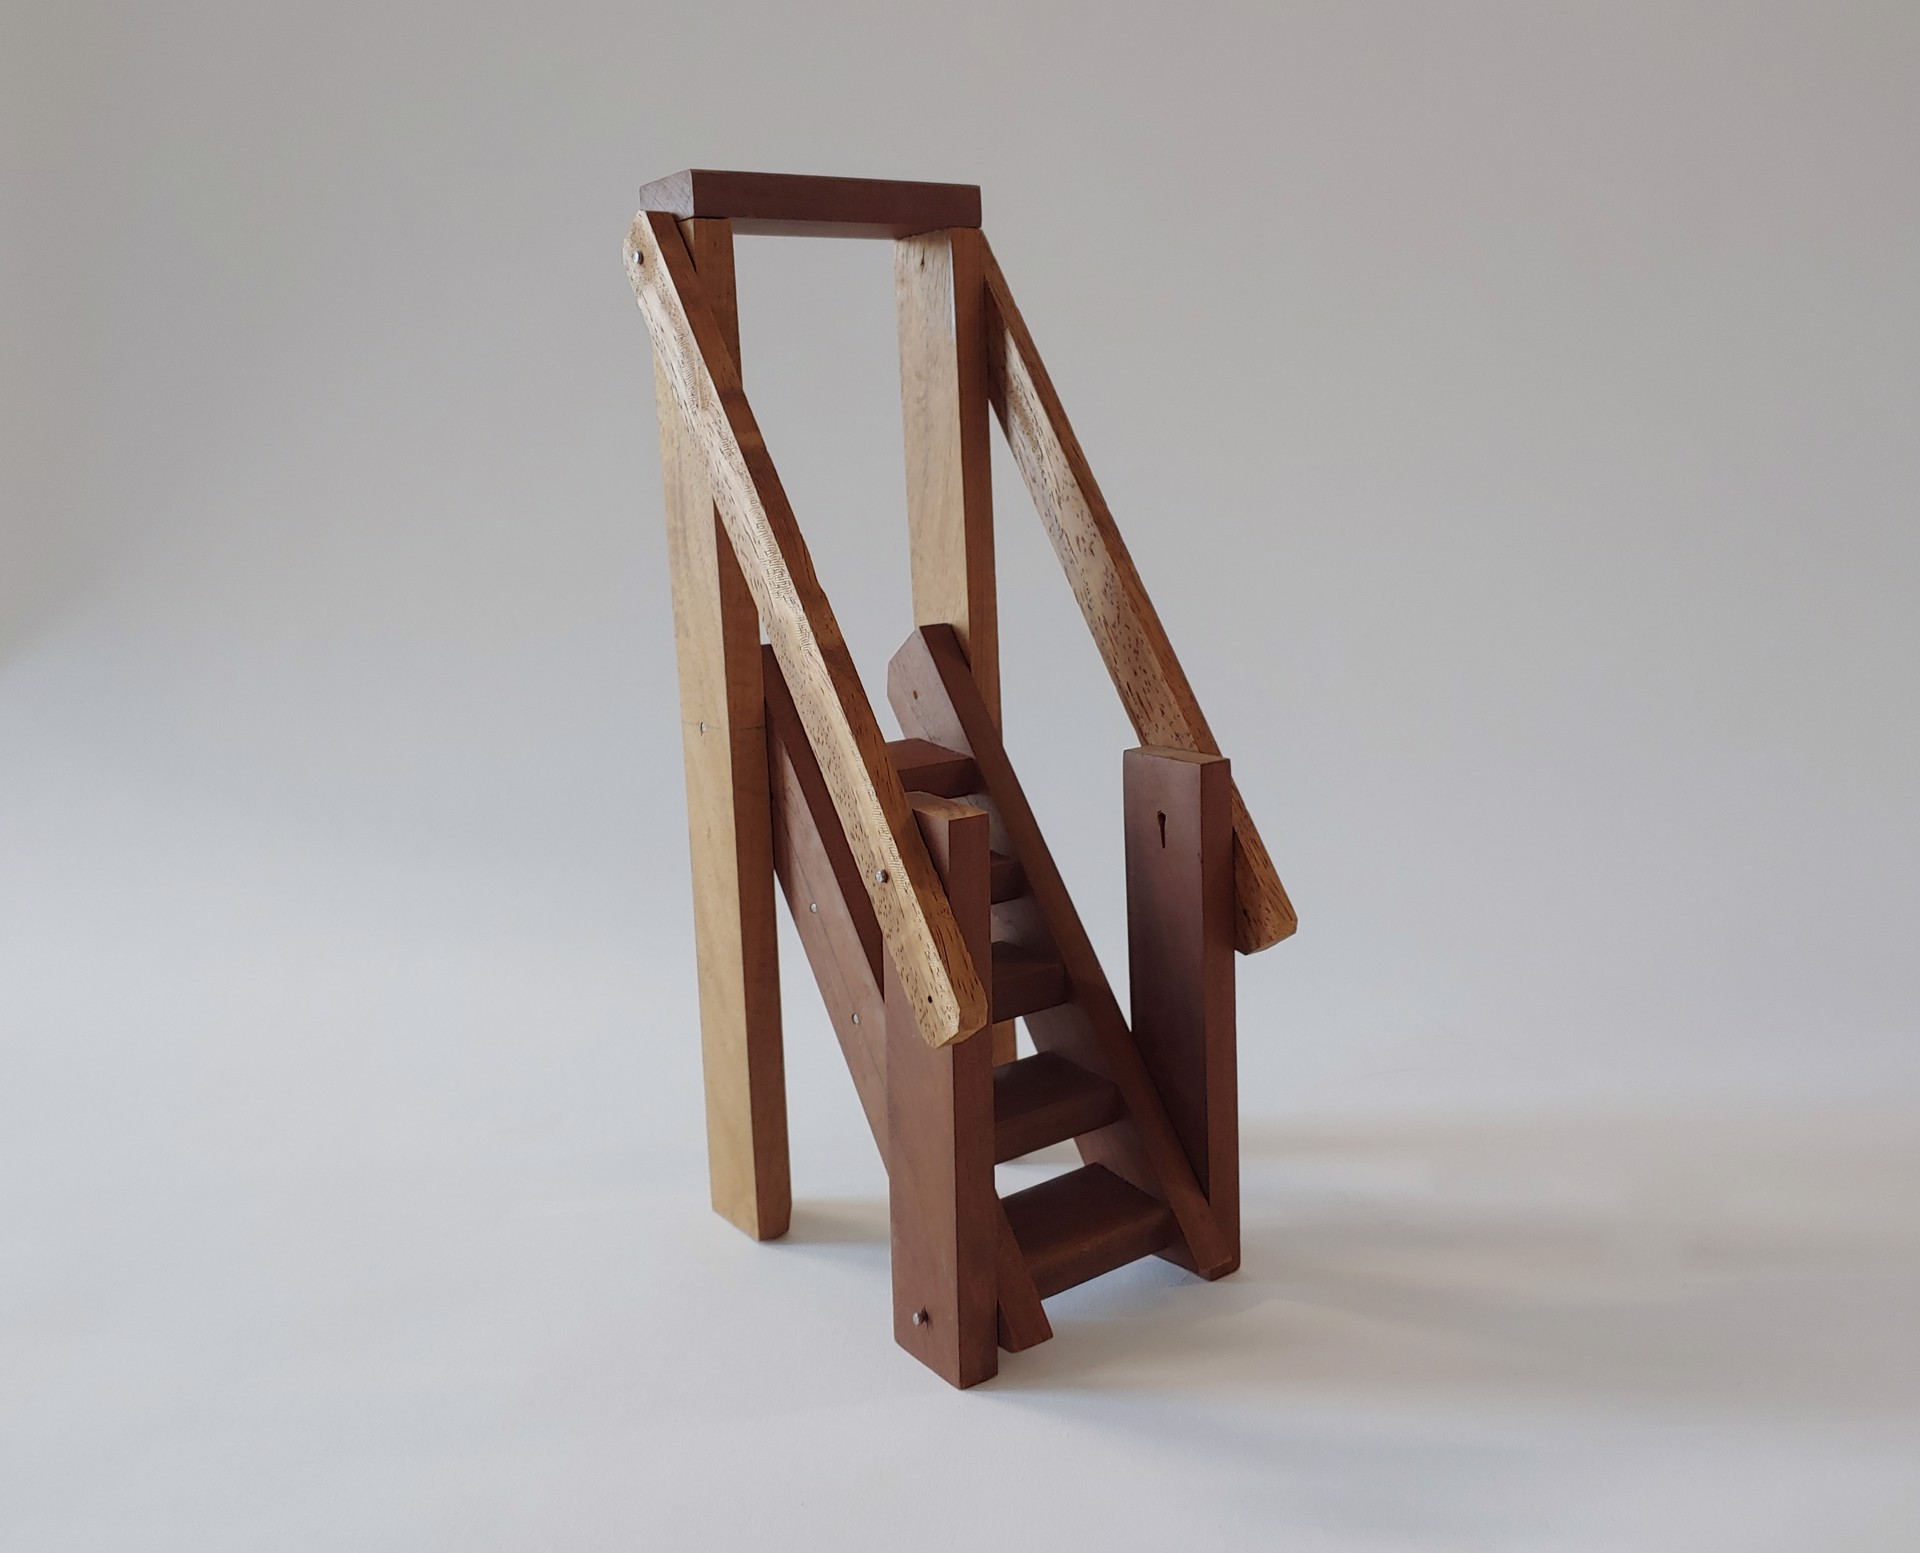 Stairs /Ladder Model - Wood Sculpture/Furniture by David Amdur